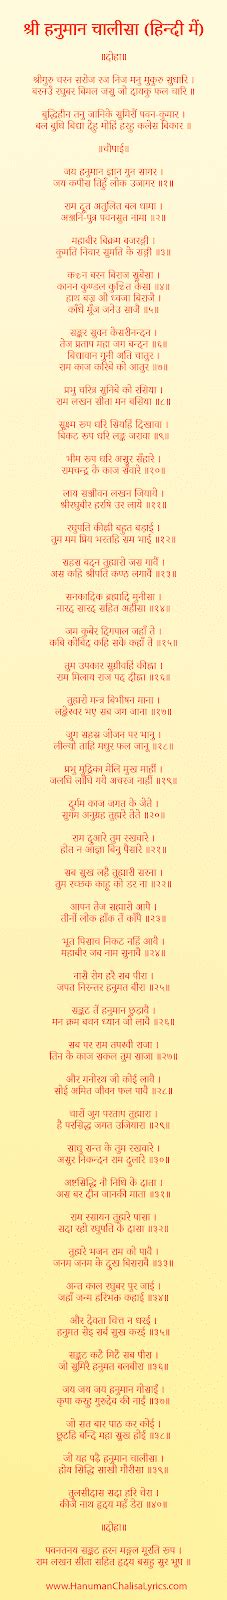 All dohas of hanuman chalisa have been translated to english. Hanuman chalisa lyrics in english pdf free download ...